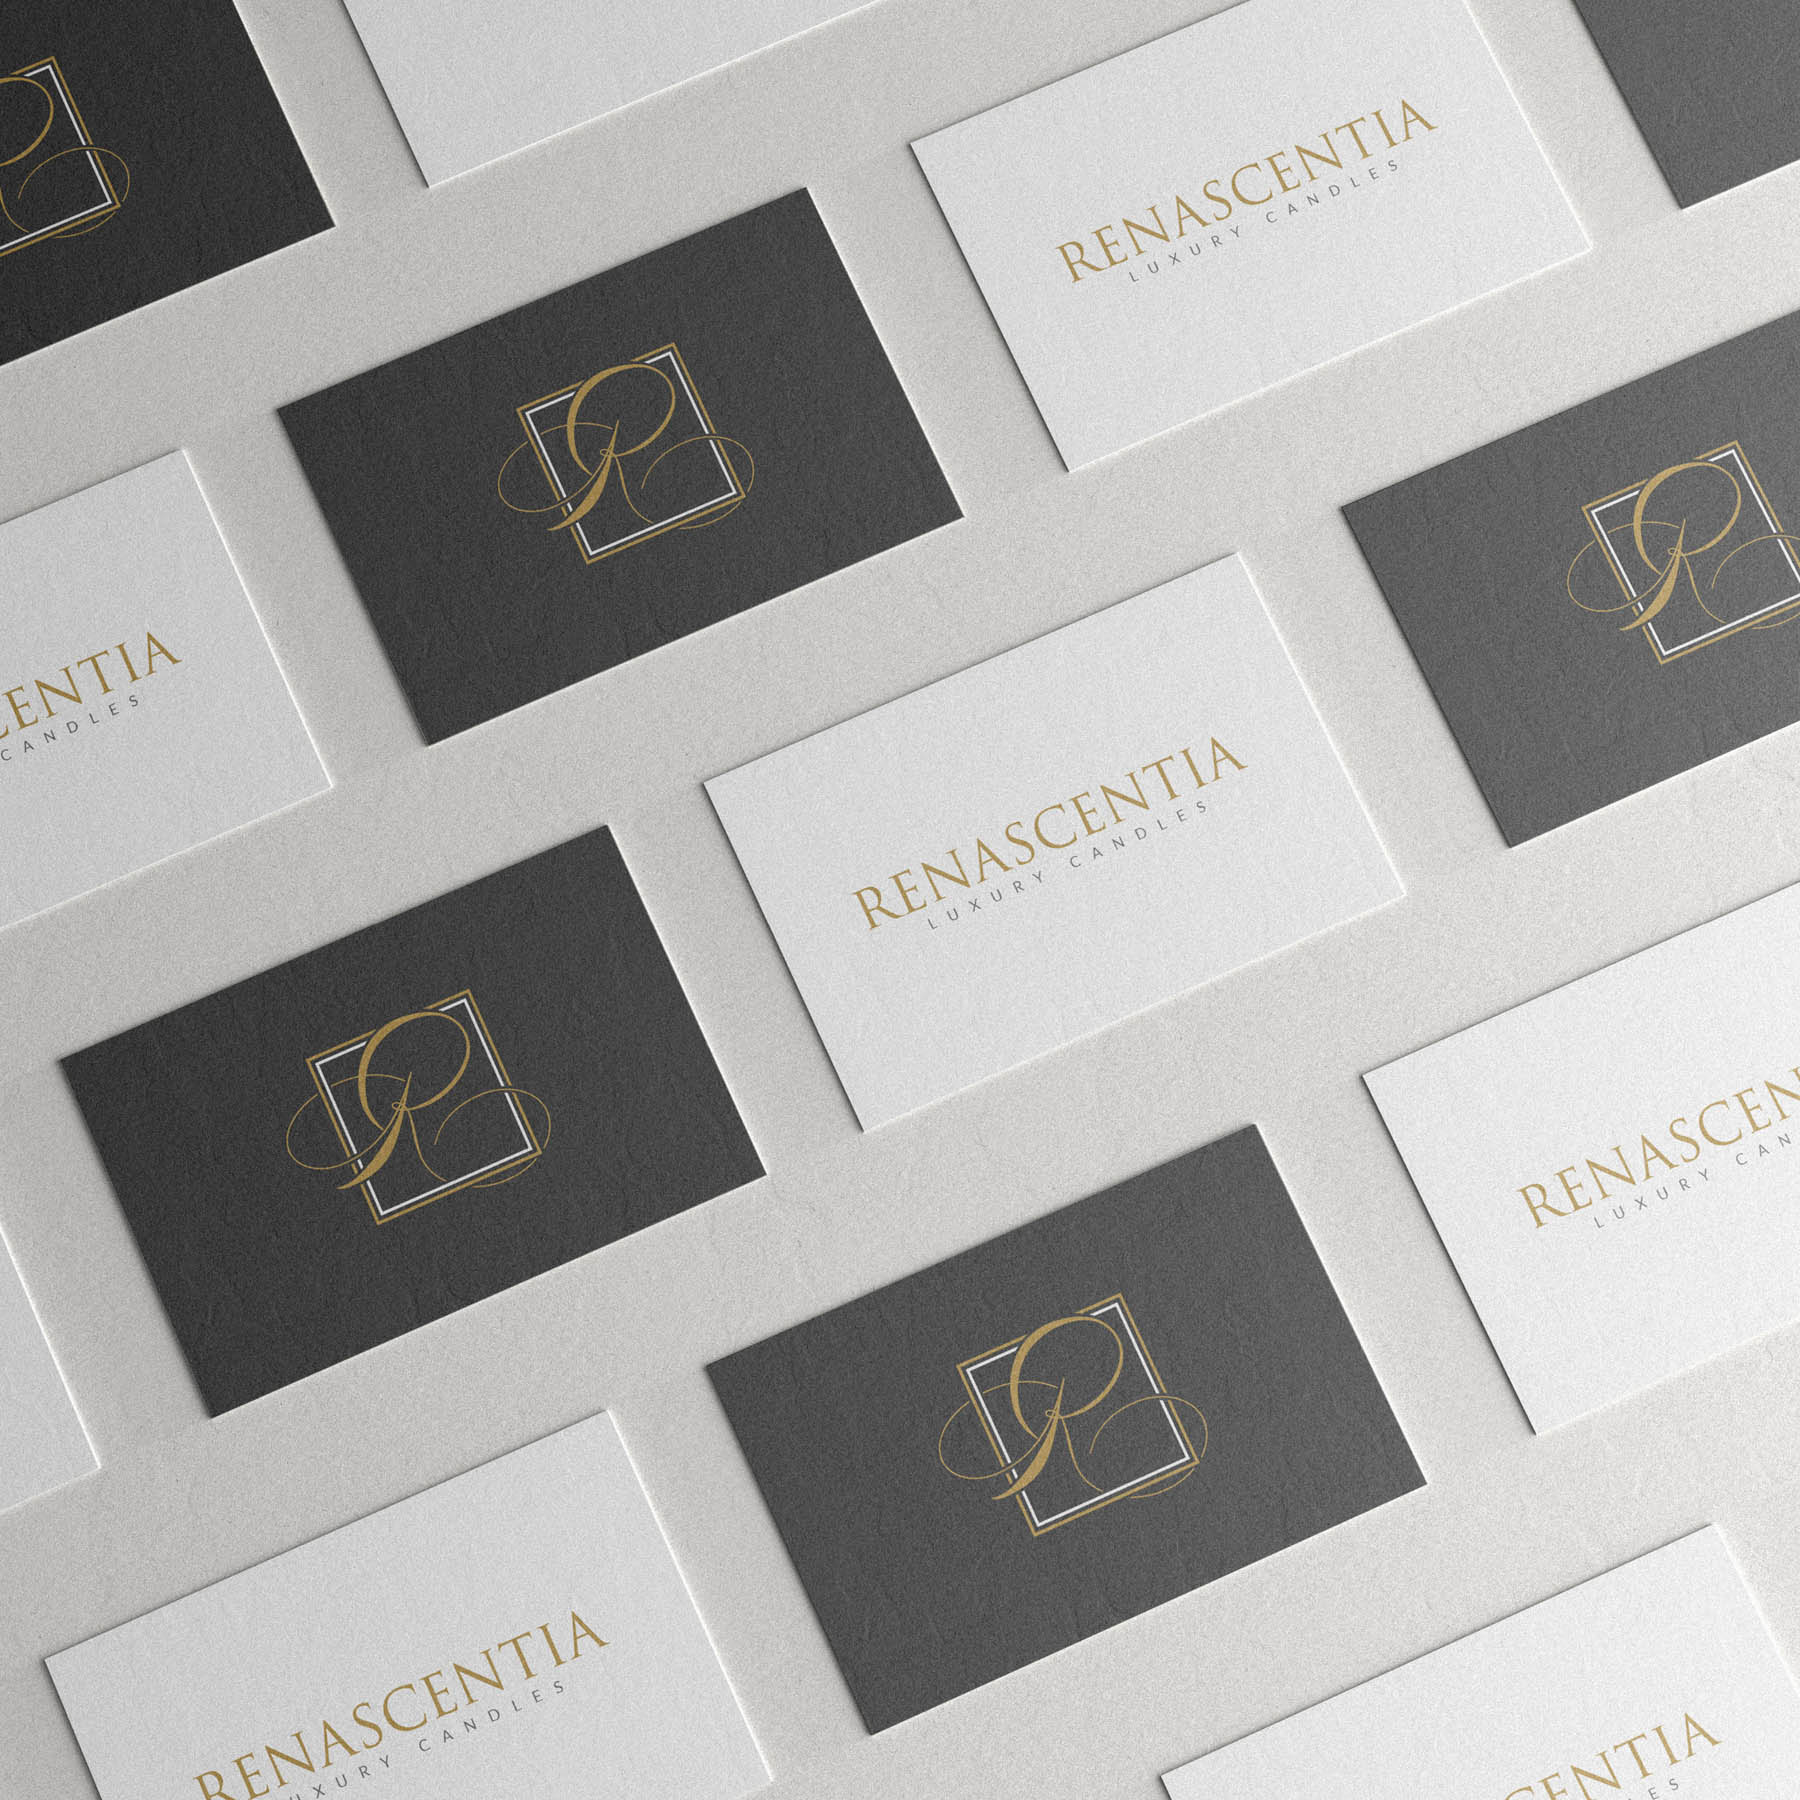 Renascentia luxury candle brand identity logo design london5